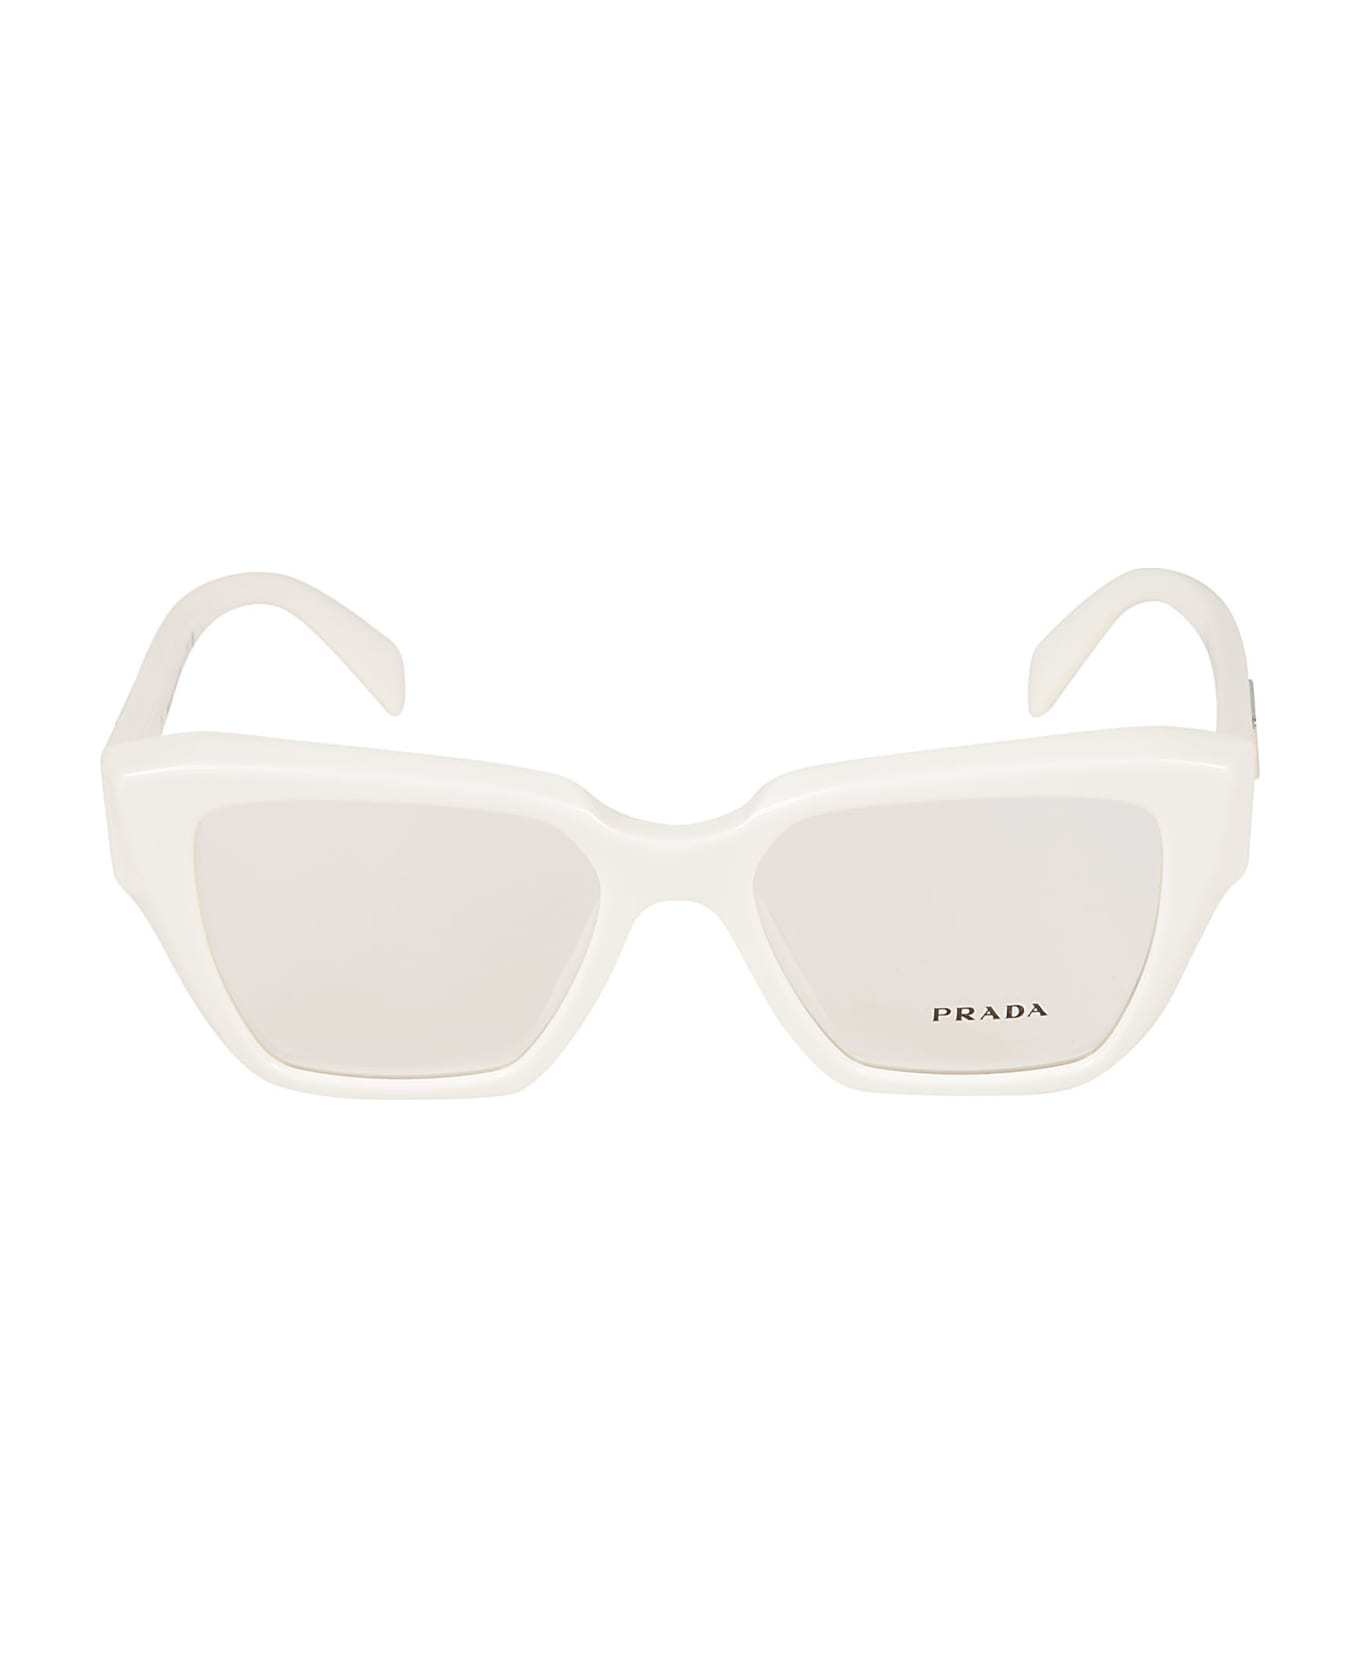 Prada Eyewear Vista Frame - 1421O1